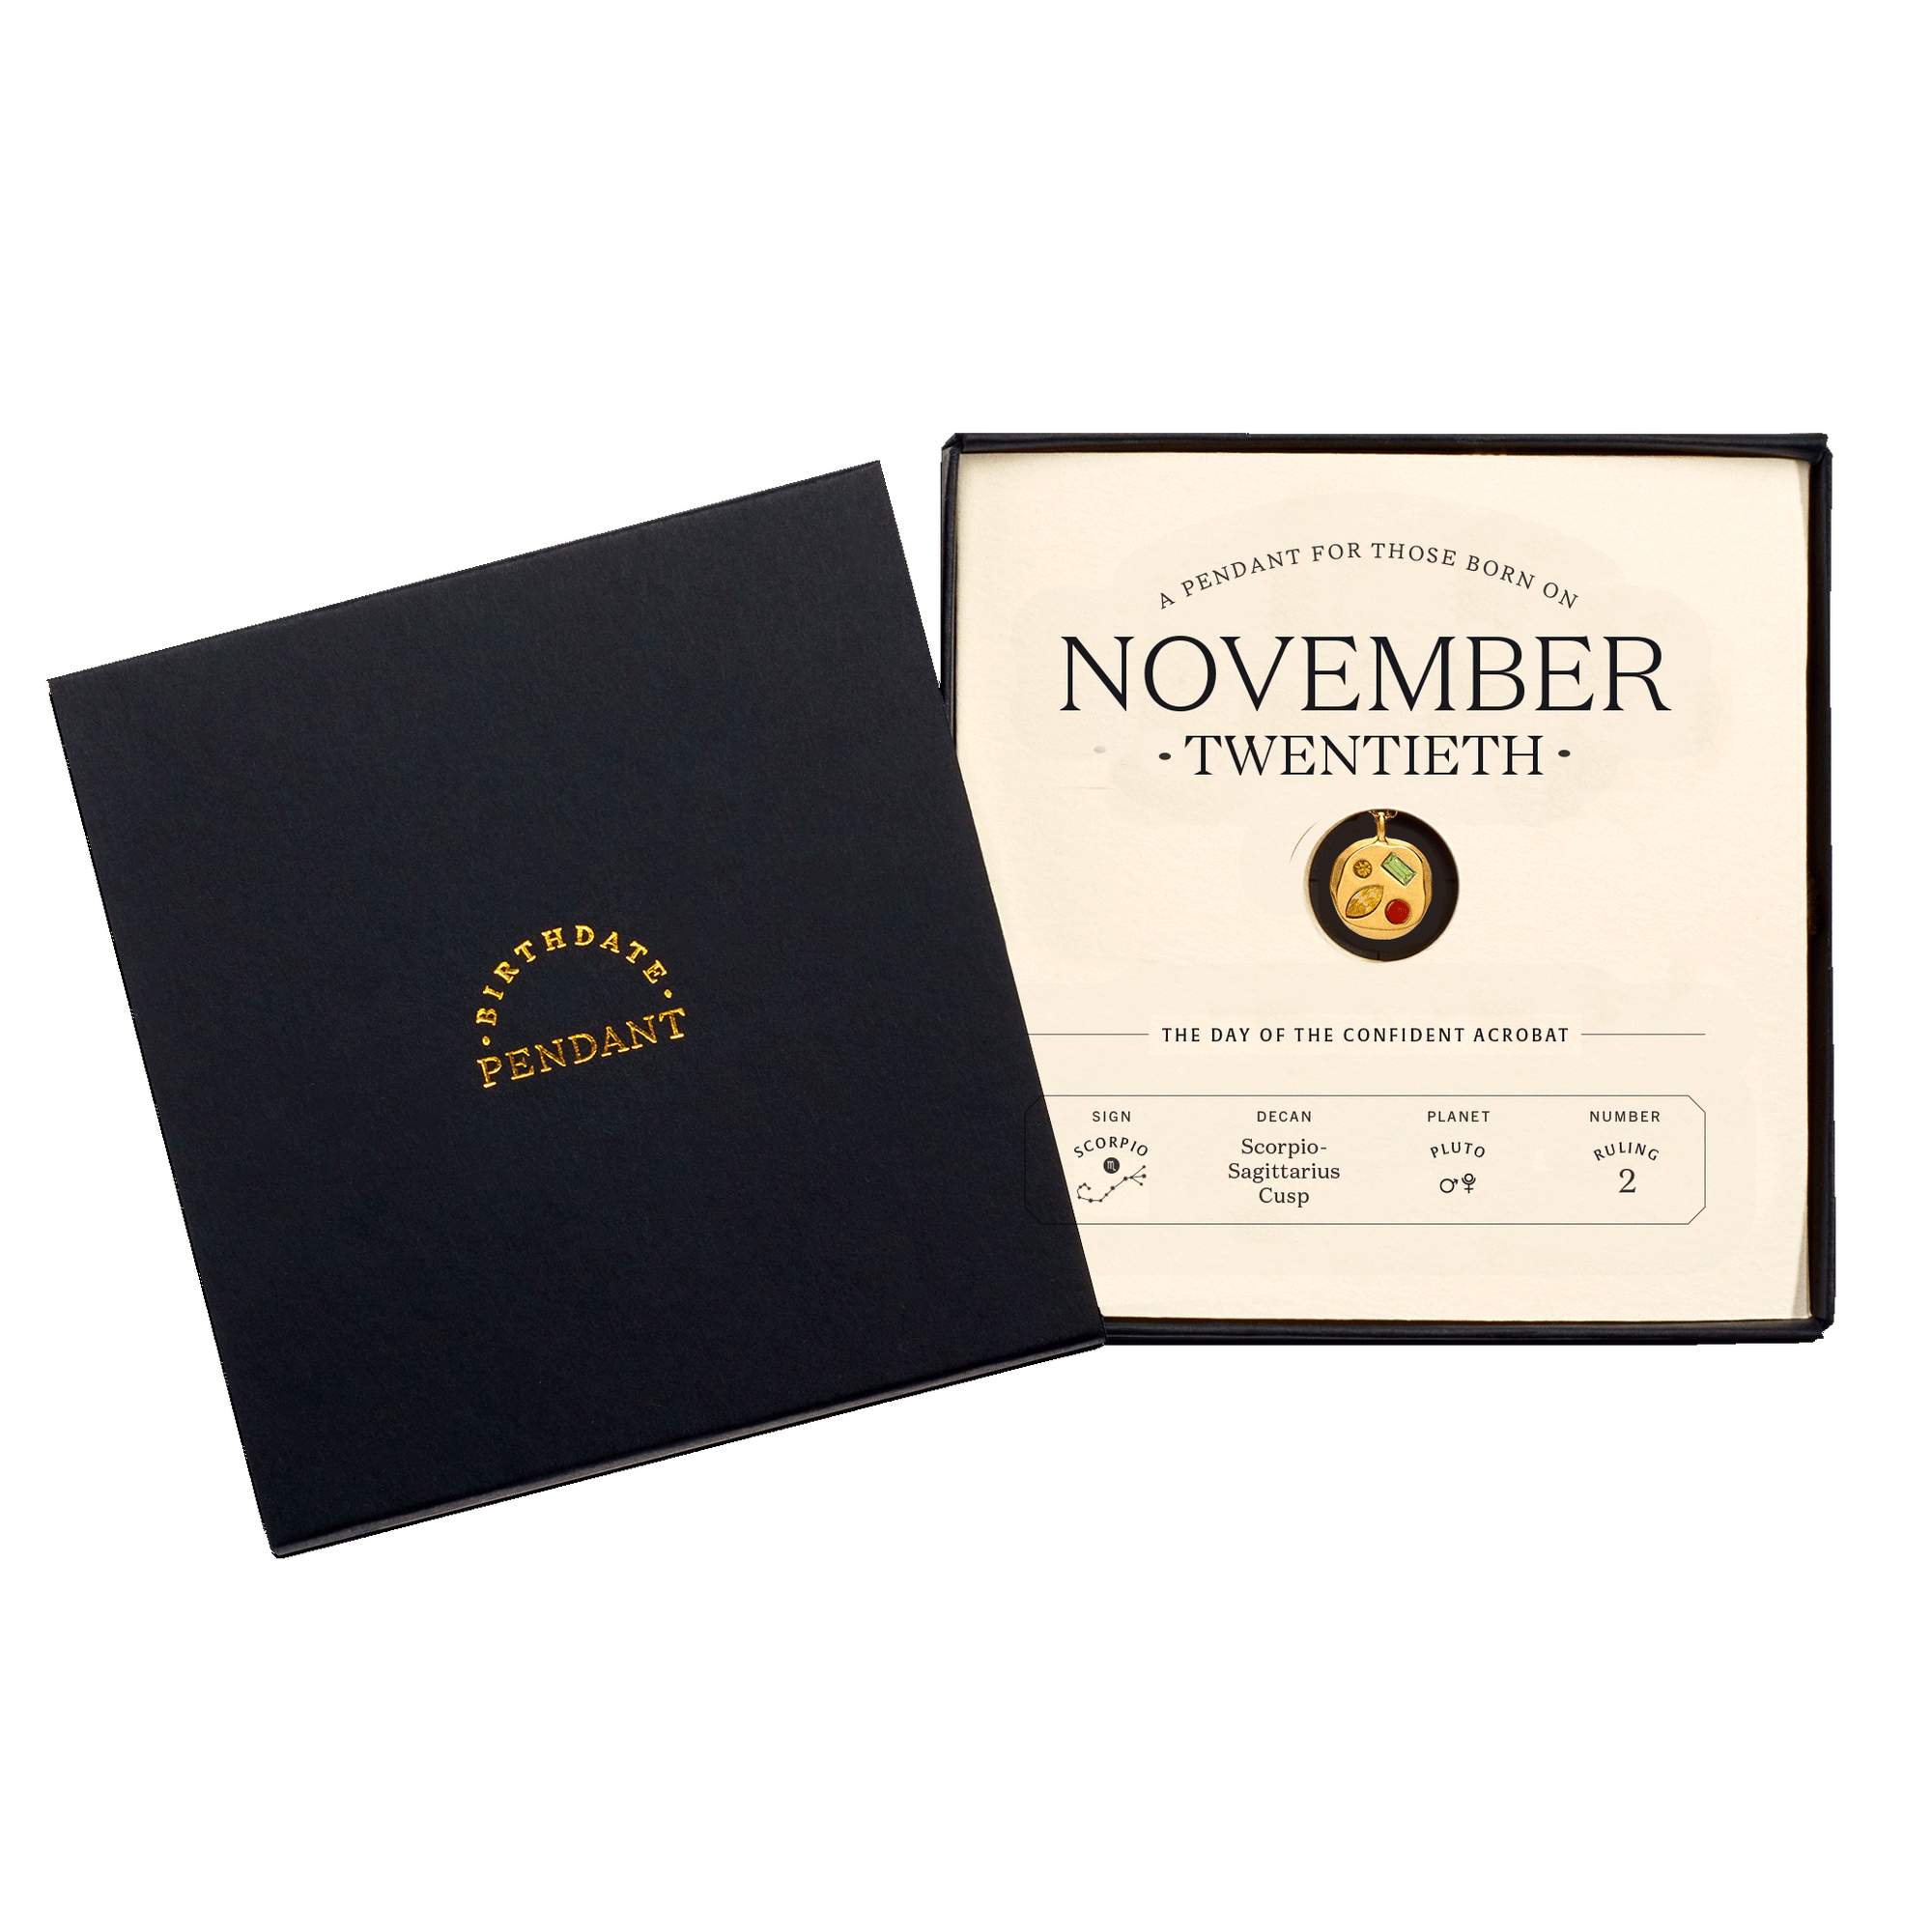 The November Twentieth Pendant inside its box